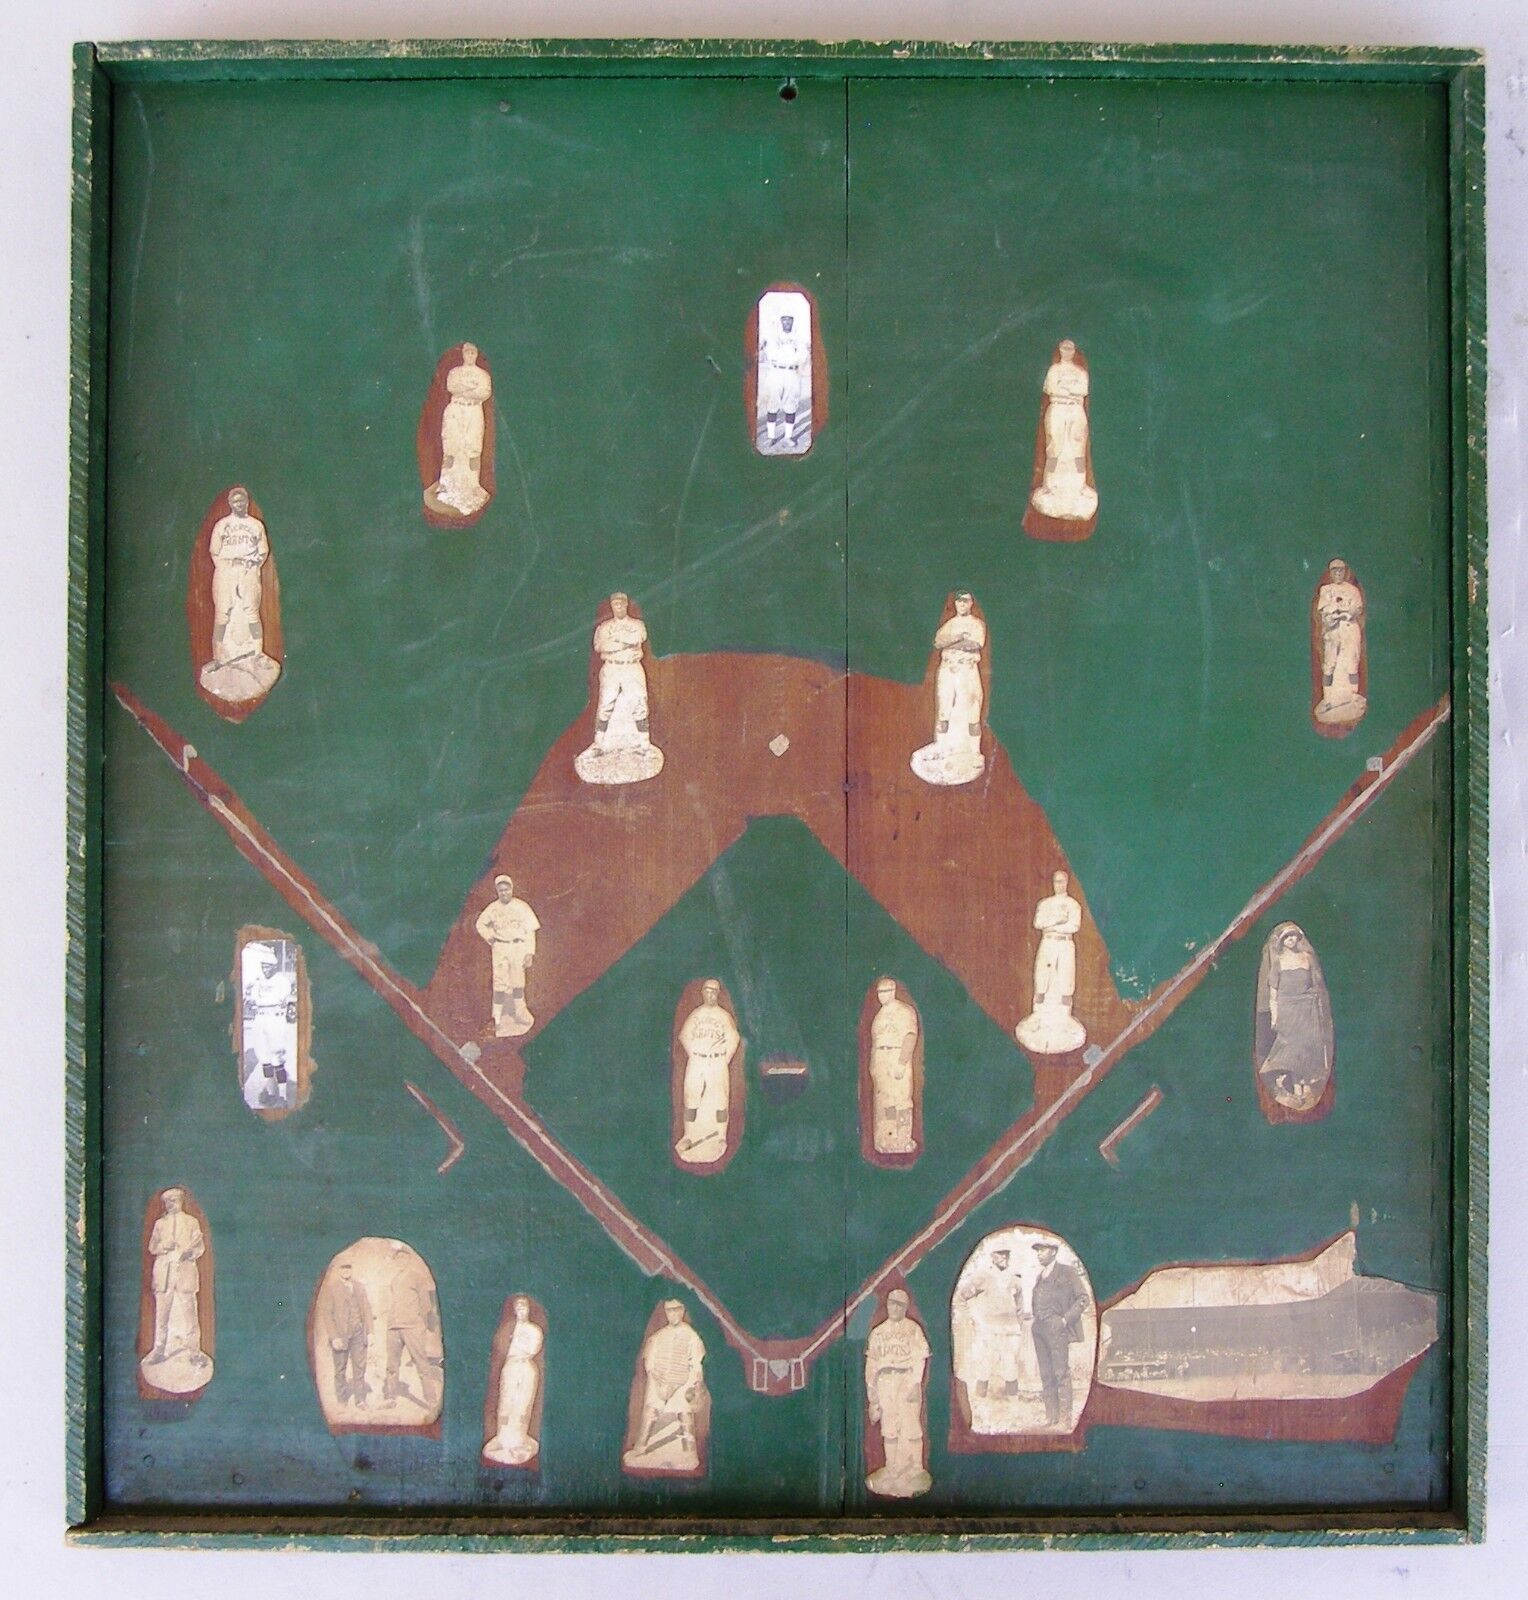 1924 Folk Art: Baseball Diamond w/players.  Oakland Pierce Giants, Negro Leagues